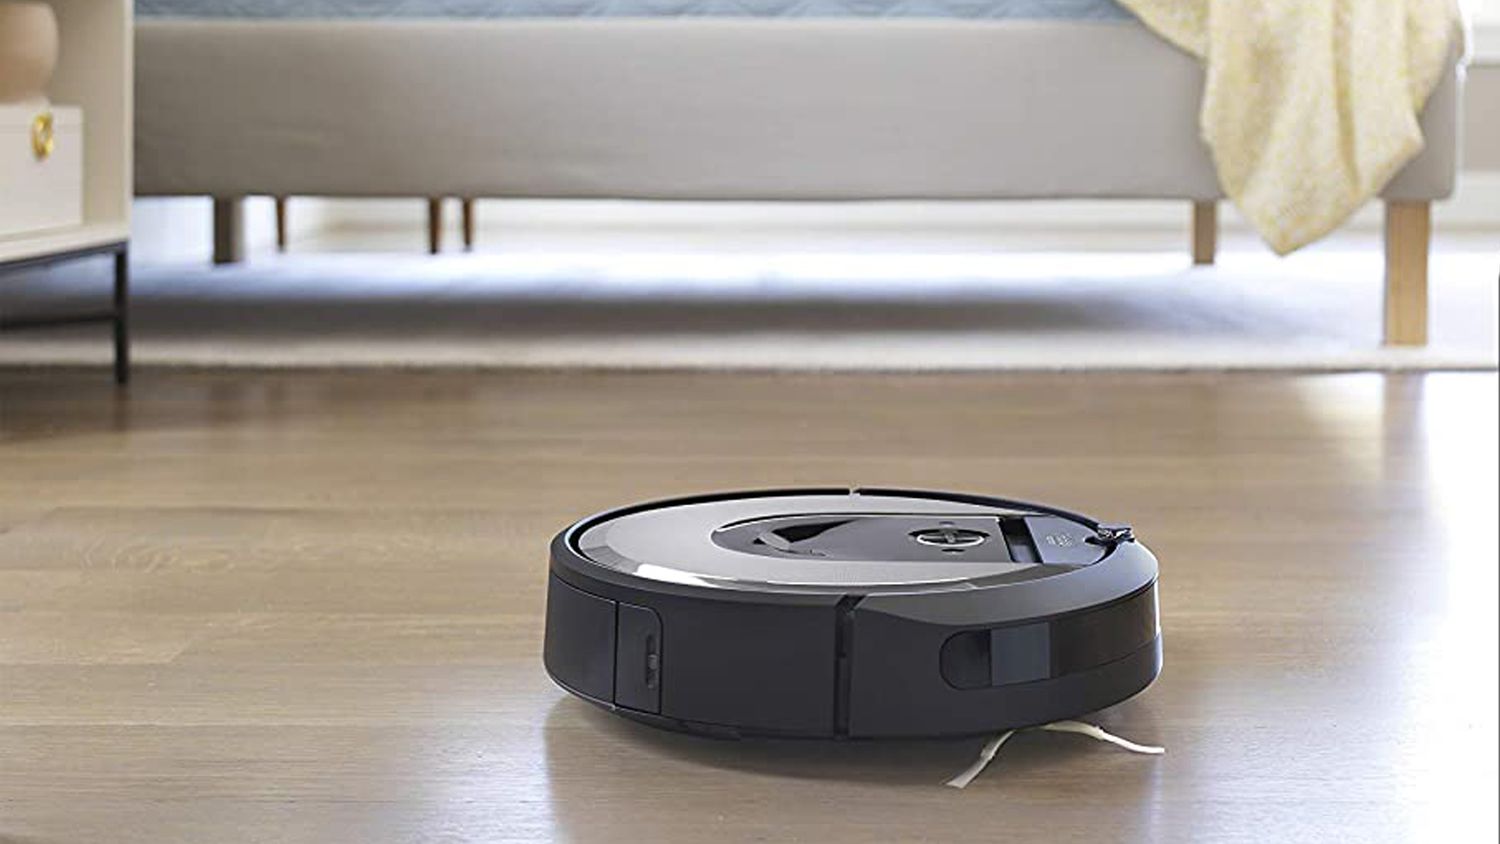 Best Roomba Vacuums